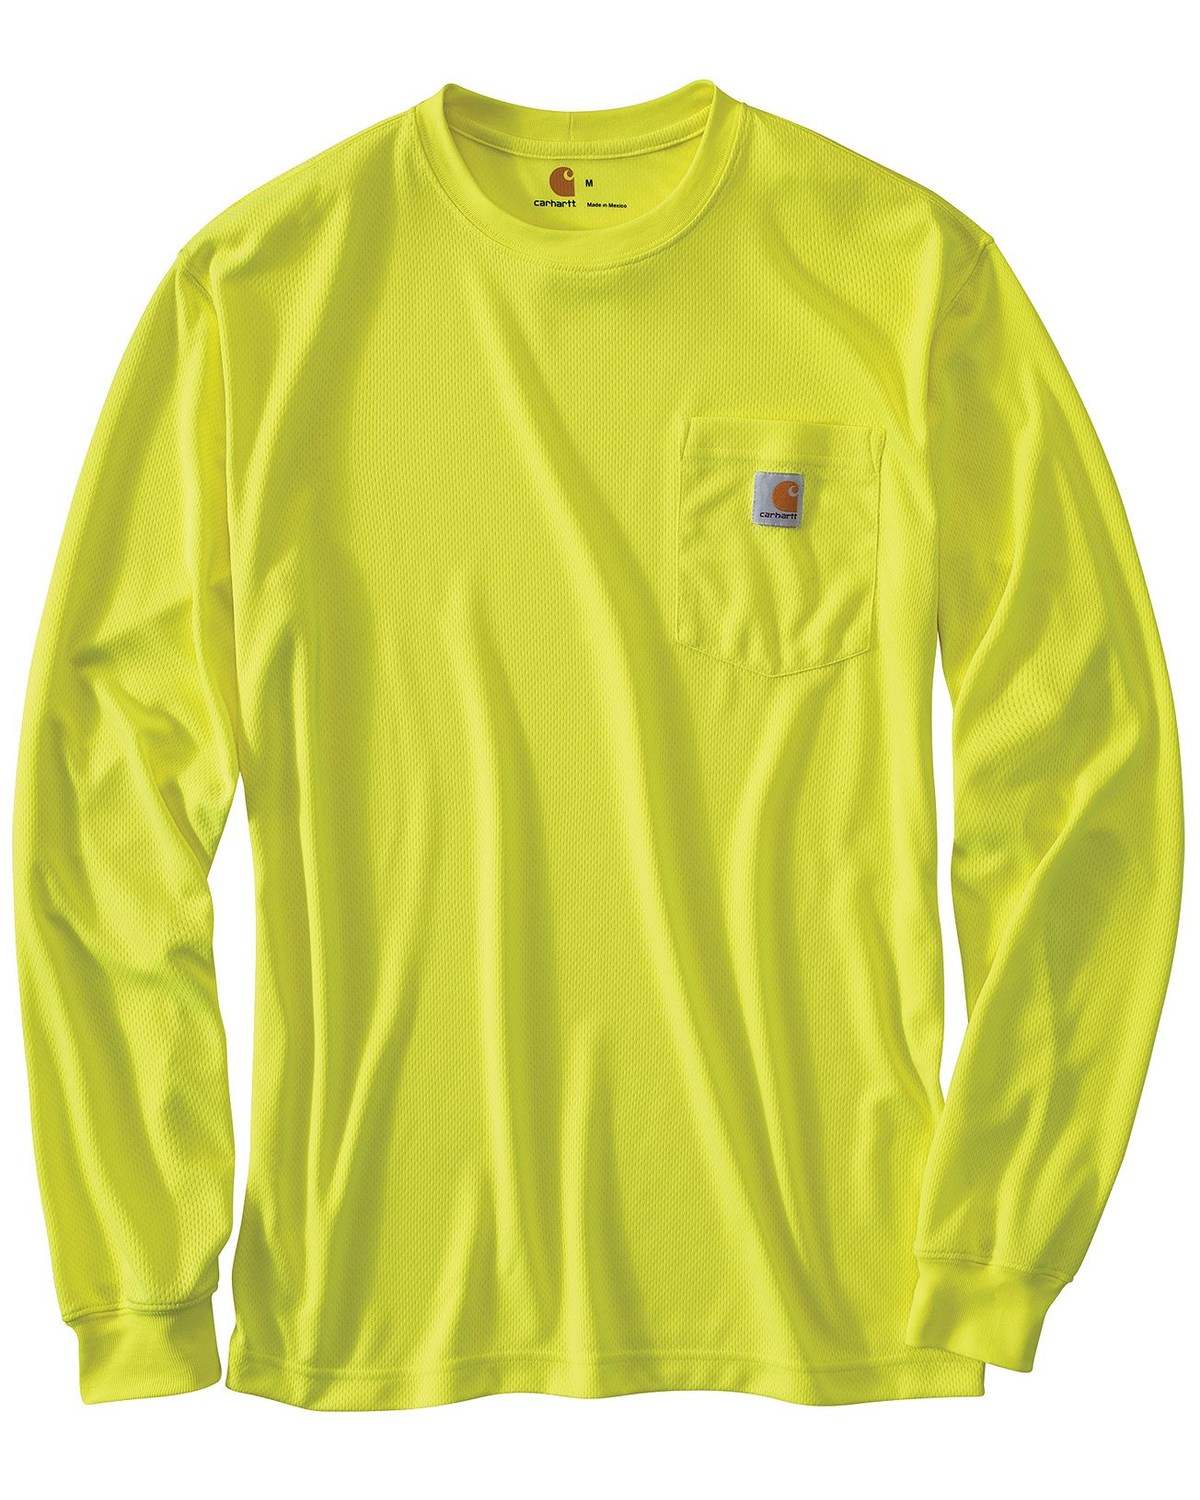 Carhartt Men's Long Sleeve Color Enhanced Force T-Shirt